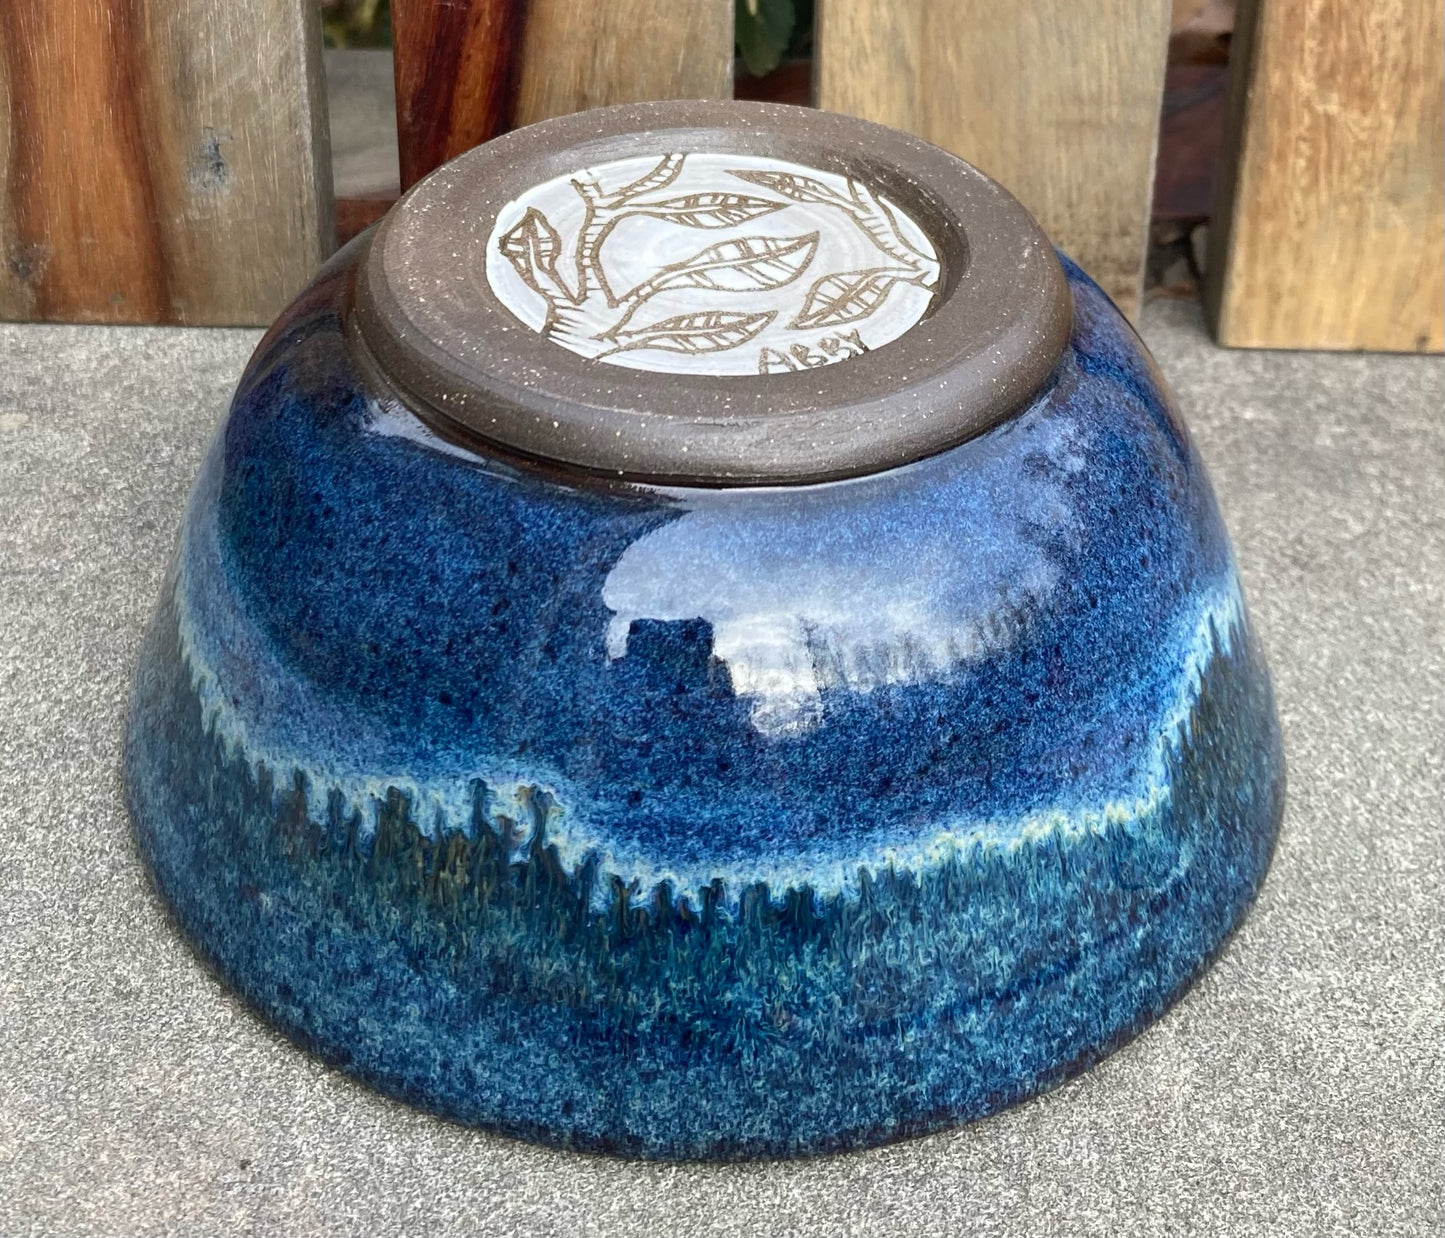 Medium Small Bright Blue Bowl